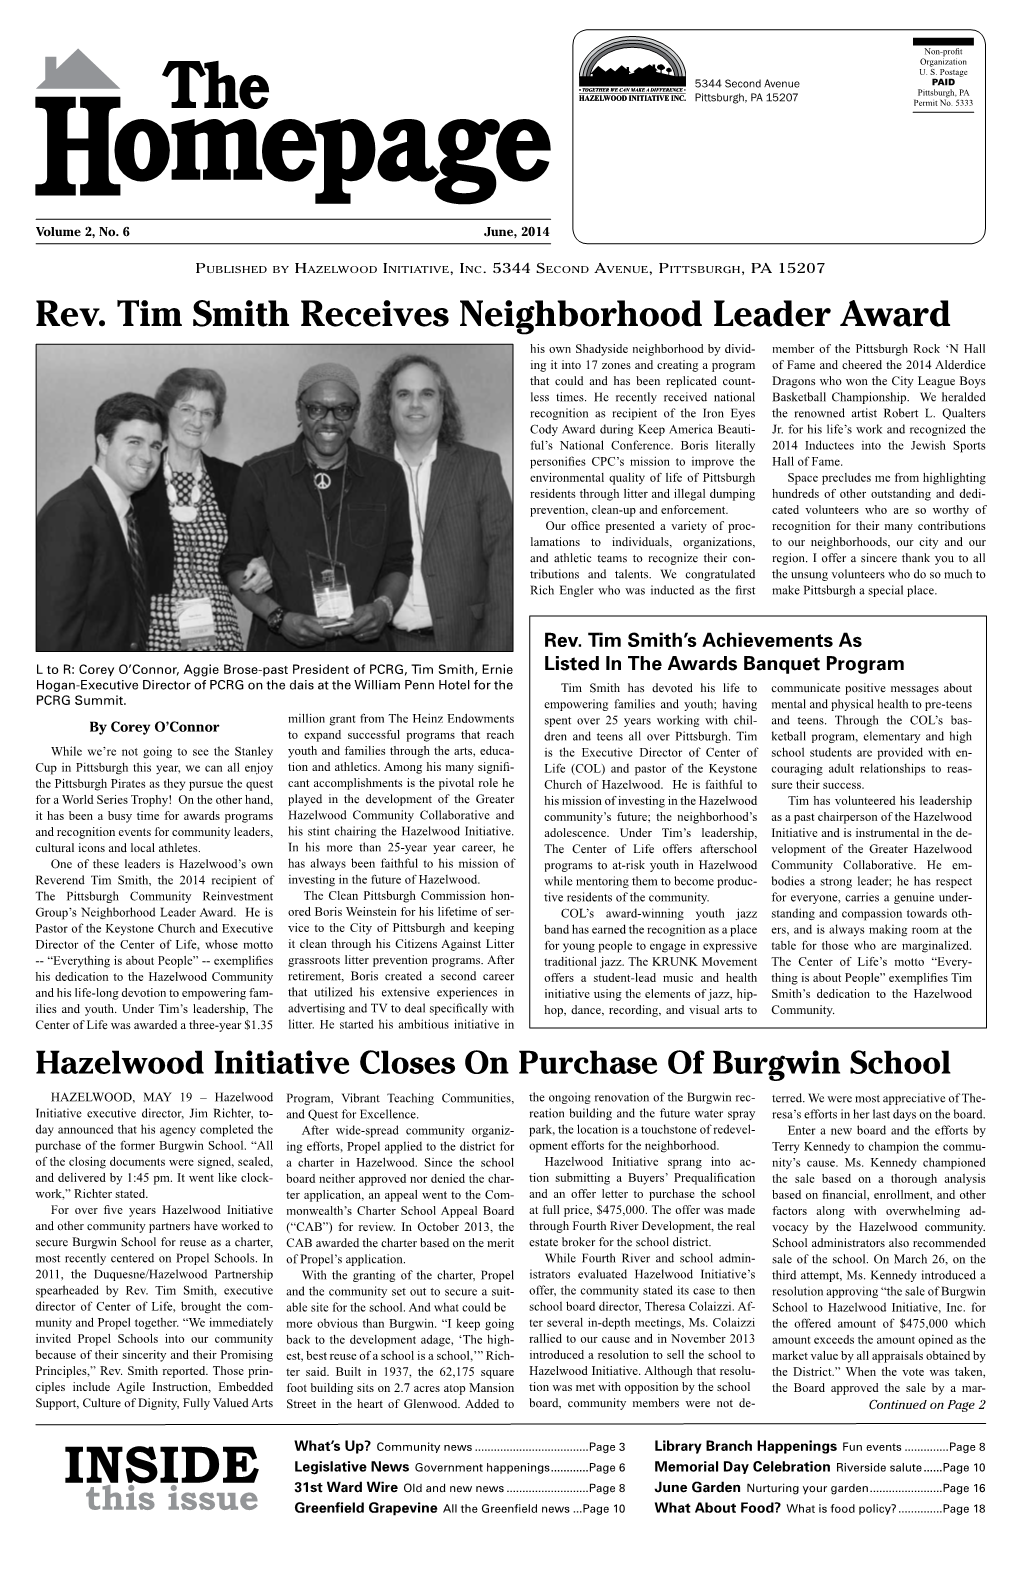 Rev. Tim Smith Receives Neighborhood Leader Award